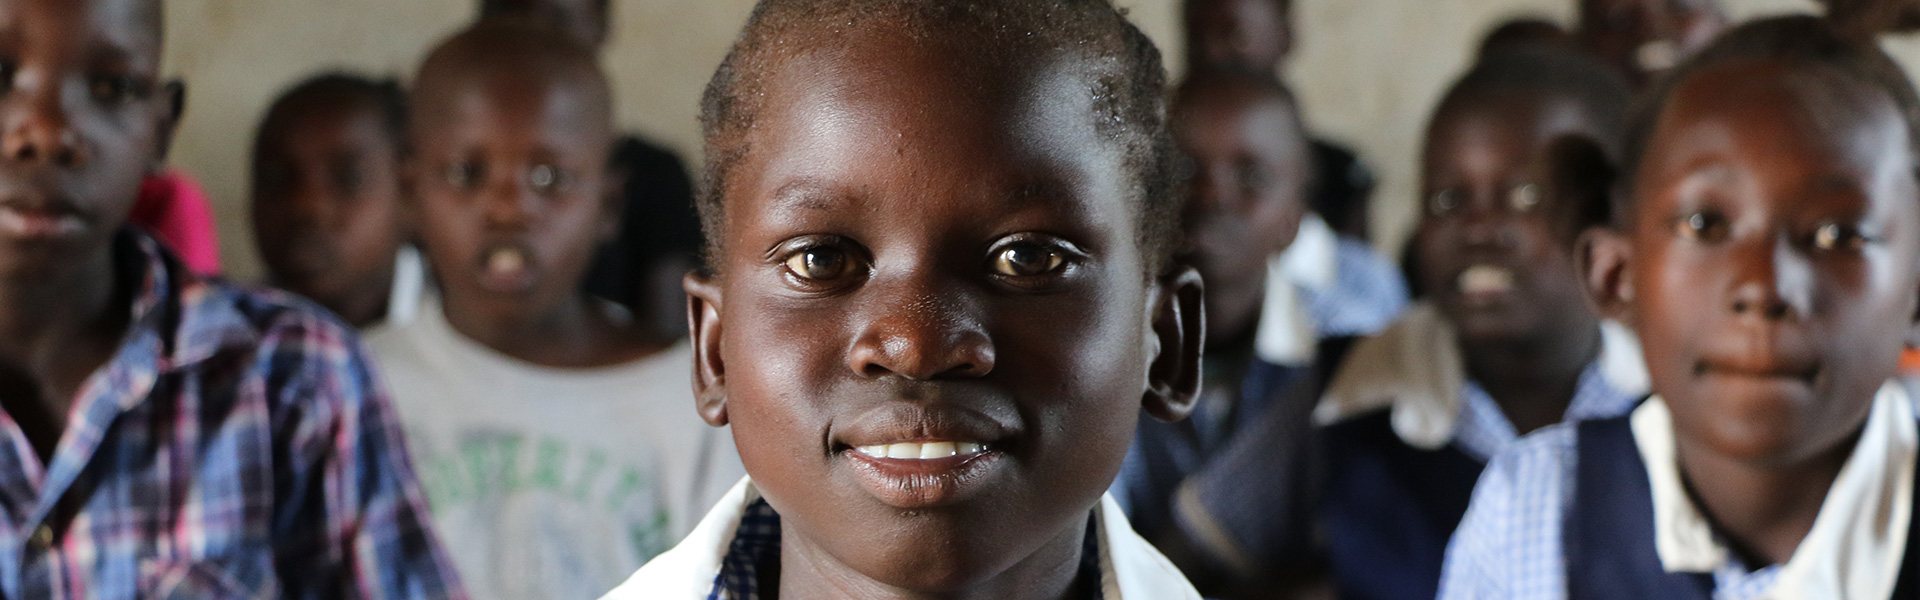 south-sudan-morobo-school-girl